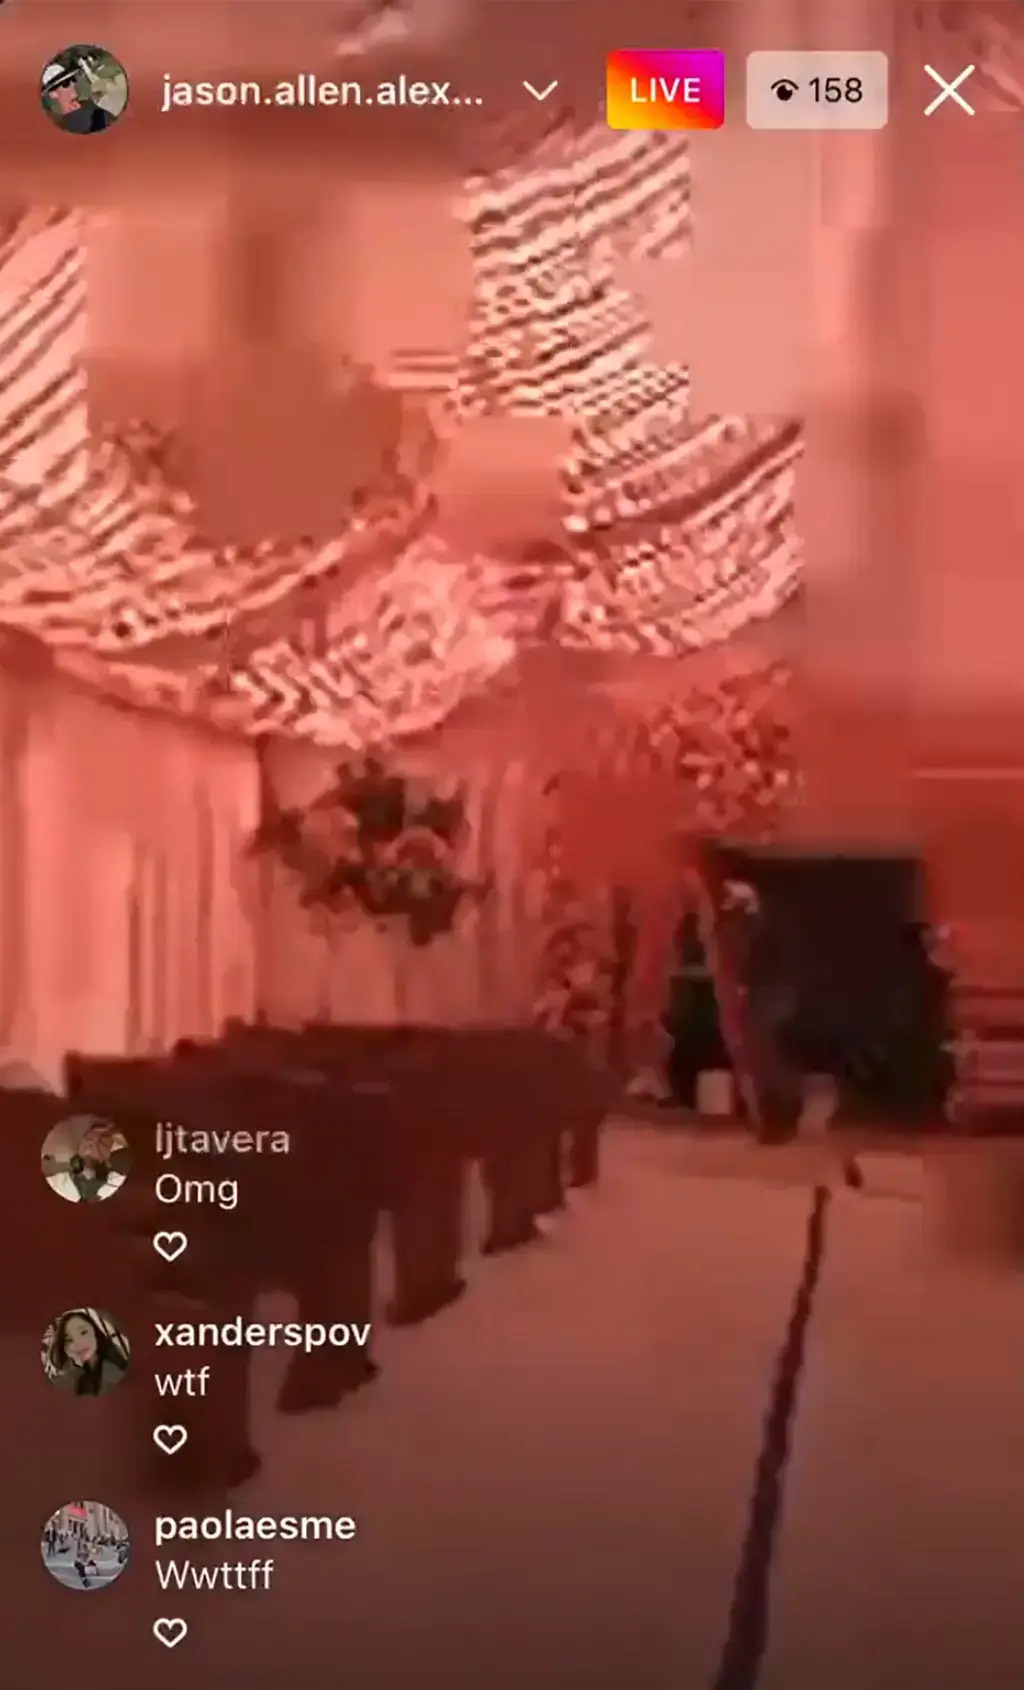 Jason Alexander's live Instagram video